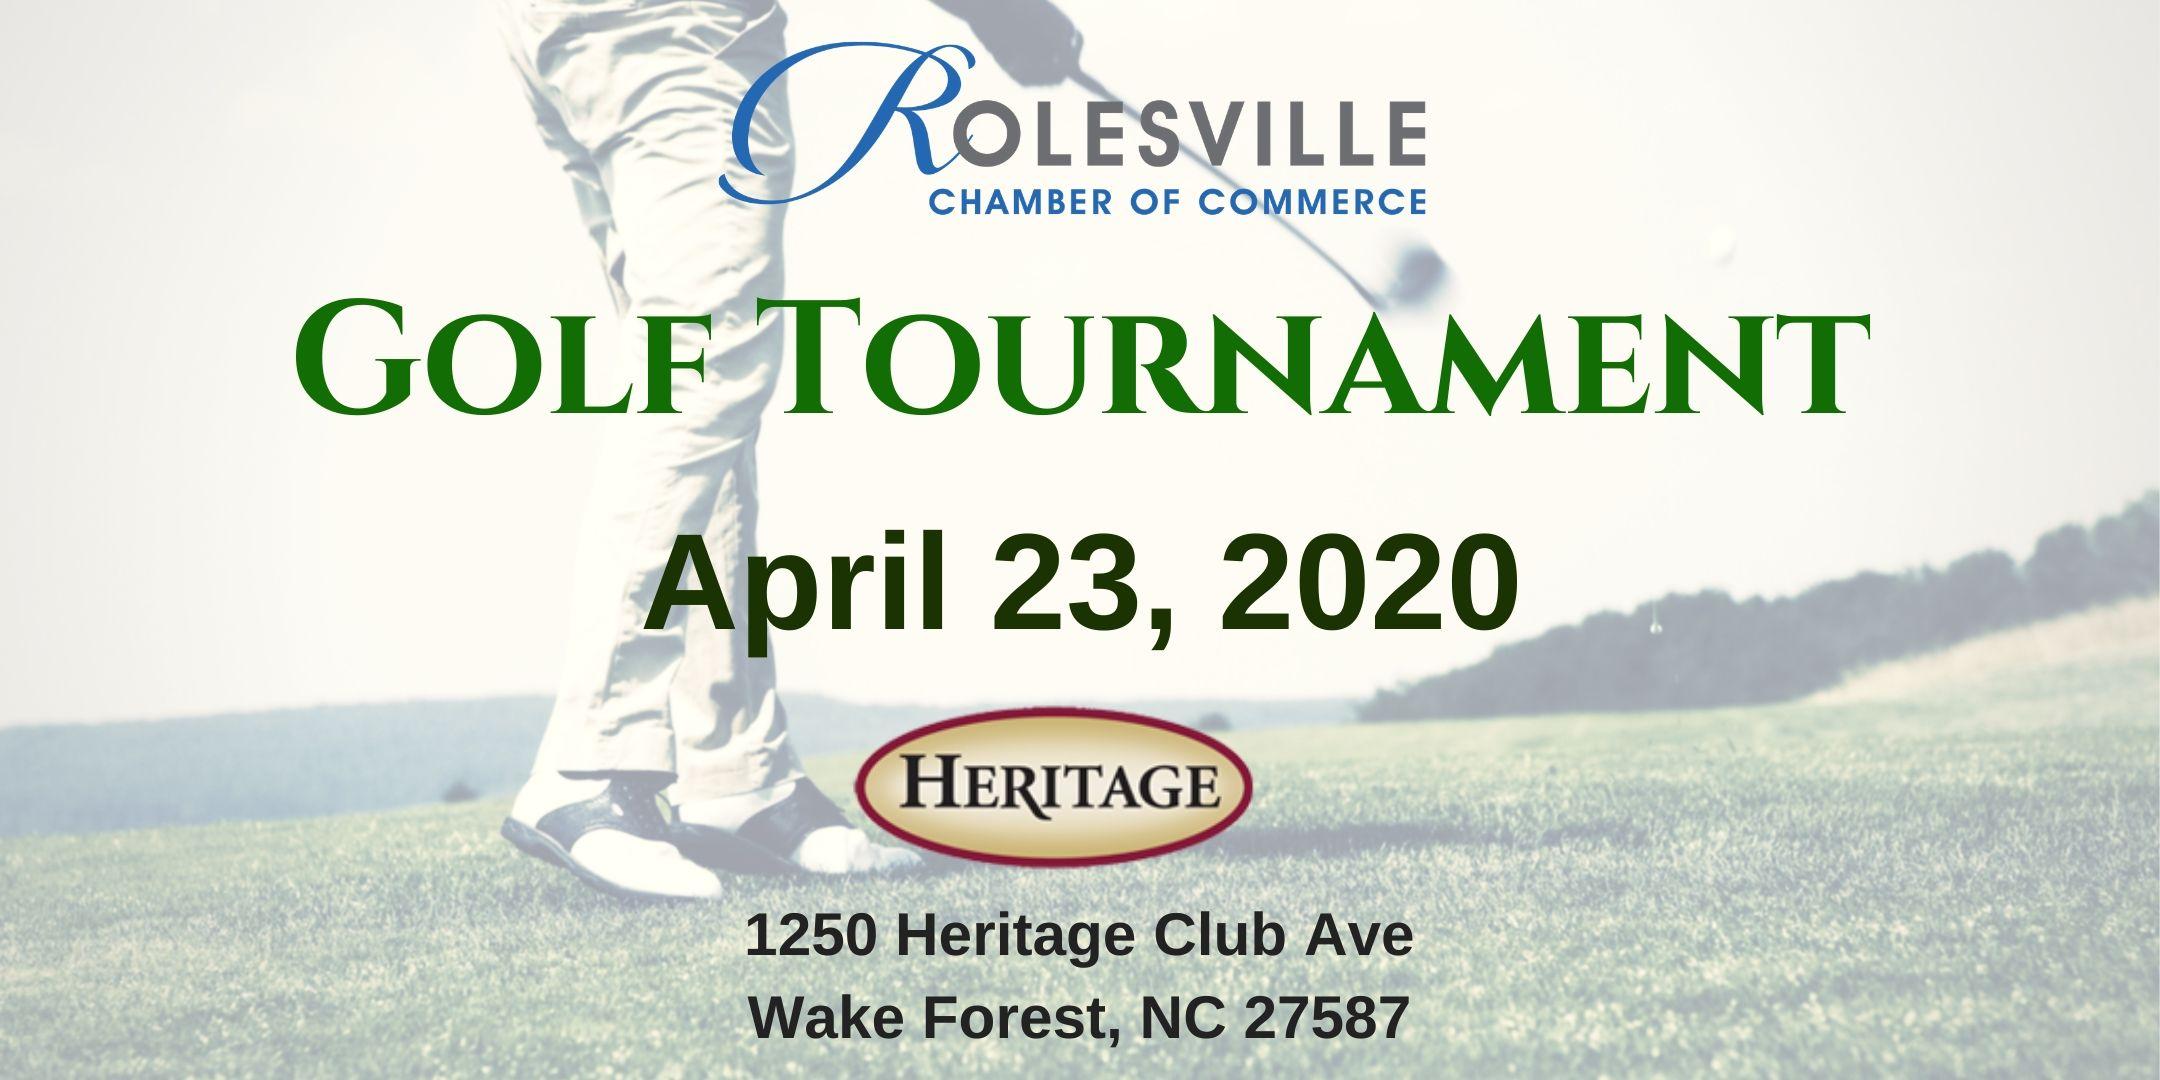 Rolesville Golf Tournament